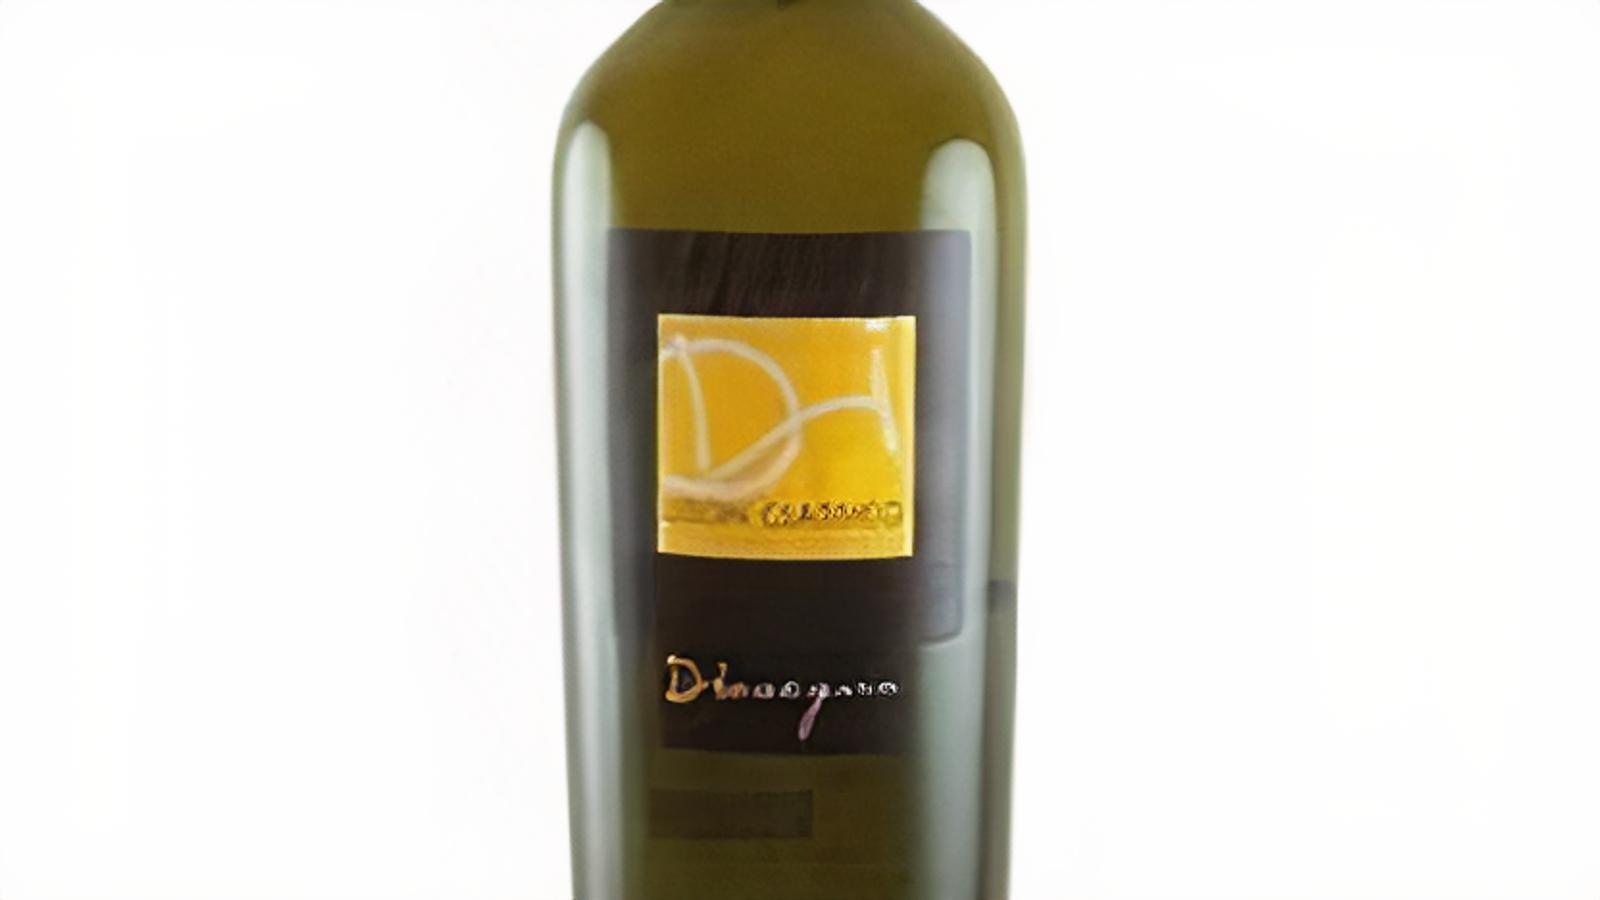 Lison Dissegna, 750mL wine (13% ABV)